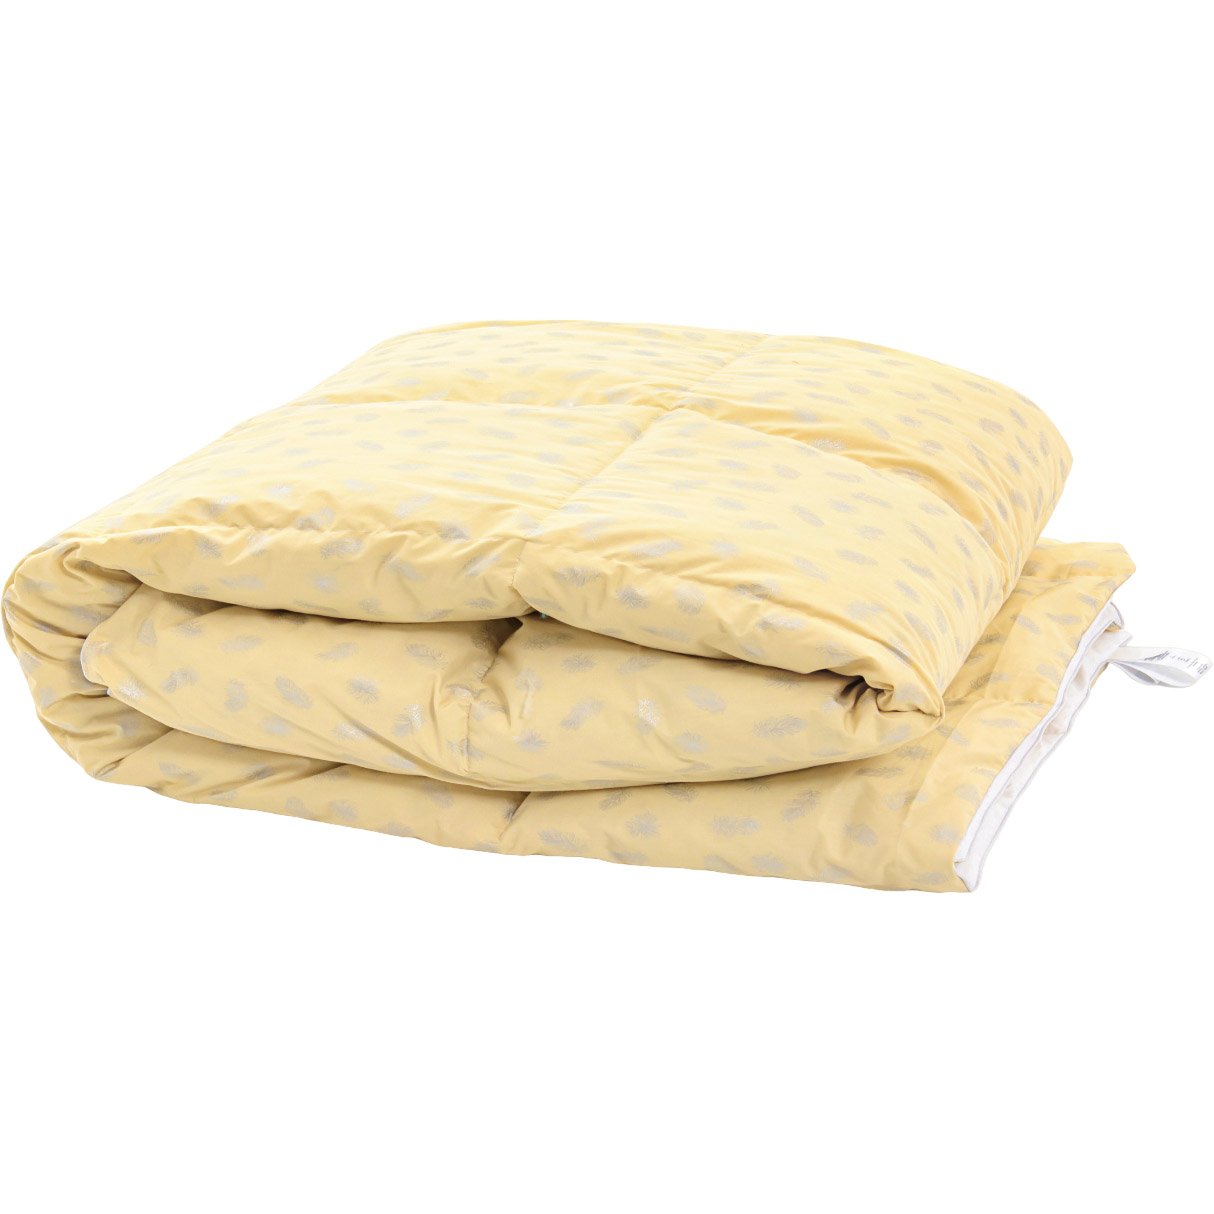 Одеяло пуховое MirSon Karmen №1851 Bio-Beige, 50% пух, полуторное, 205x140, бежевое (2200003014648) - фото 1